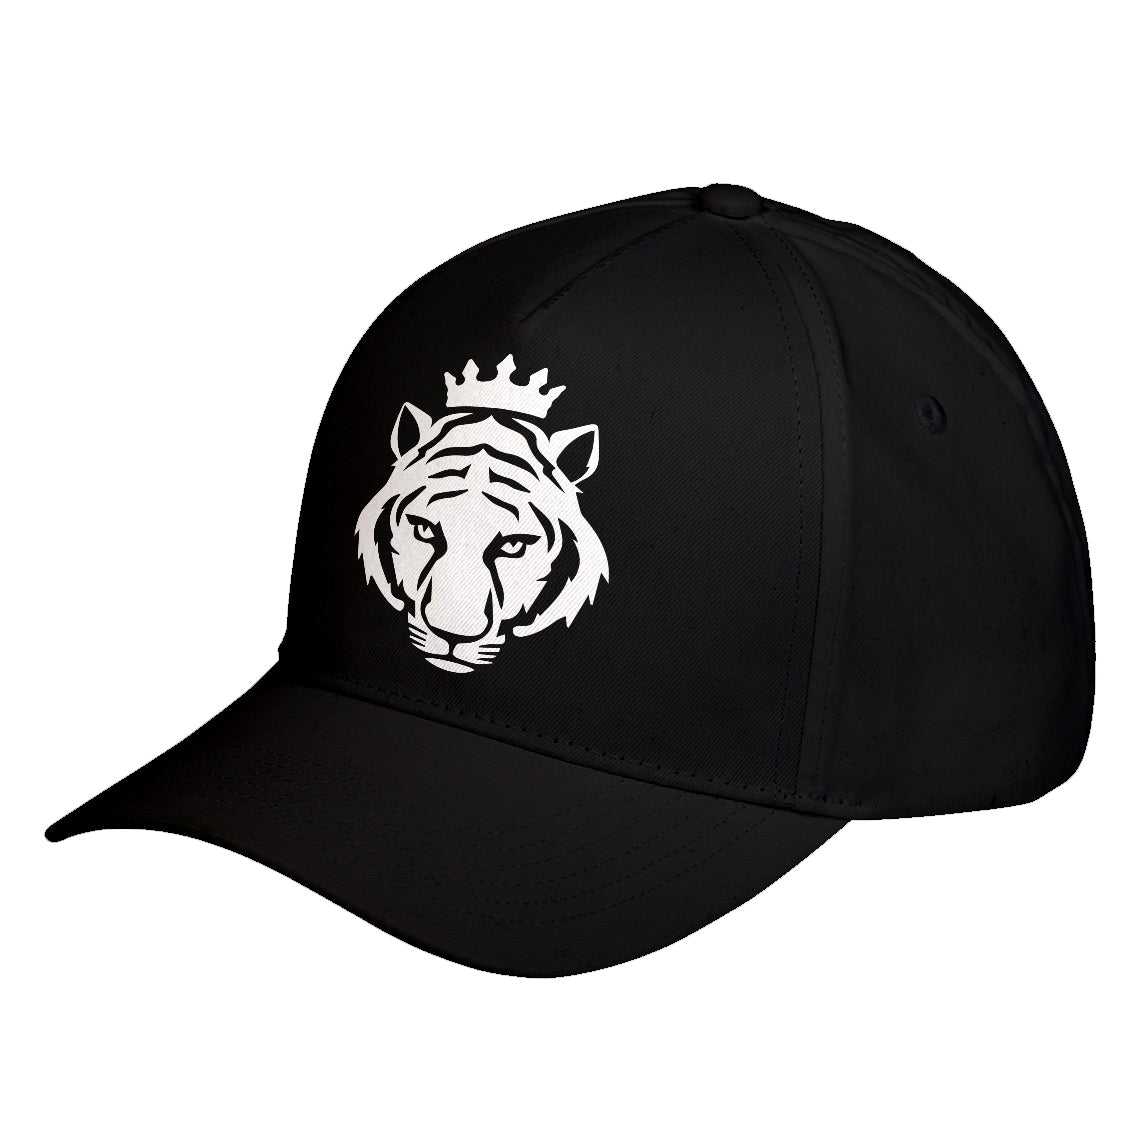 Hat King Tiger Baseball Cap